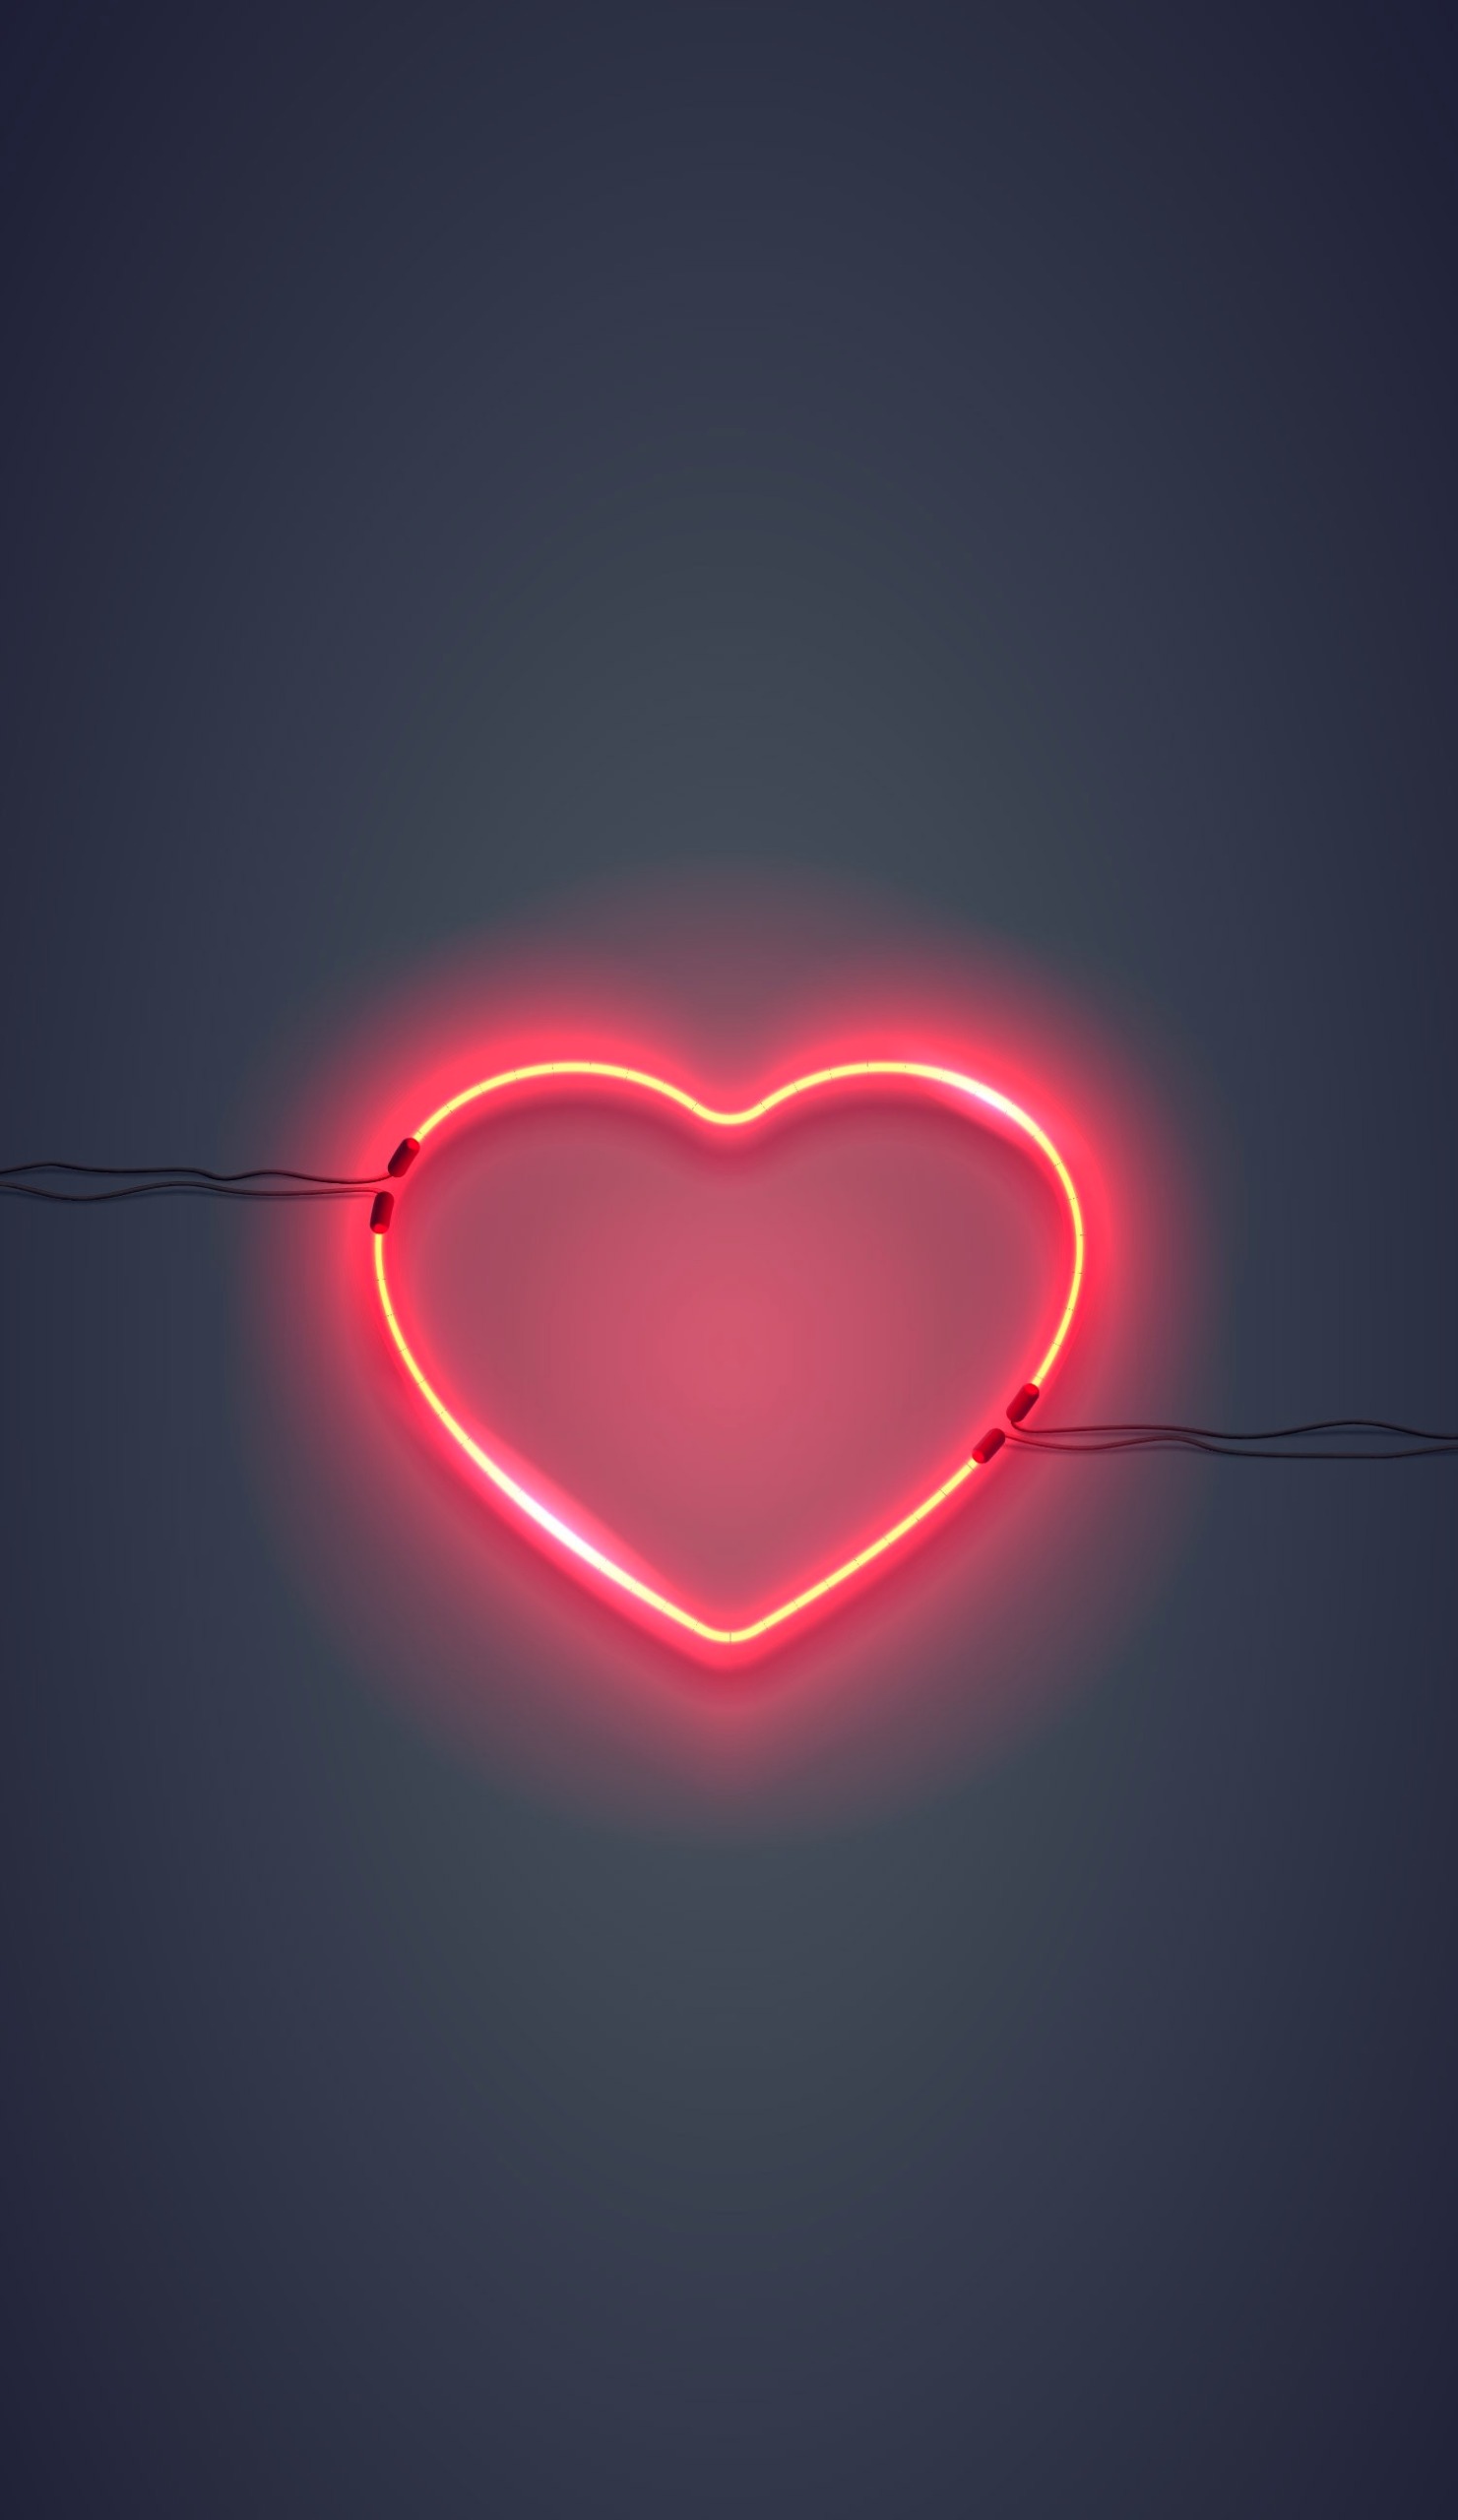 Love comes in many colors!Unsplash (Public Domain)#FreeToEdit #heart #love #neon #neonlights #red #light #dark #shadow #objects #minimal